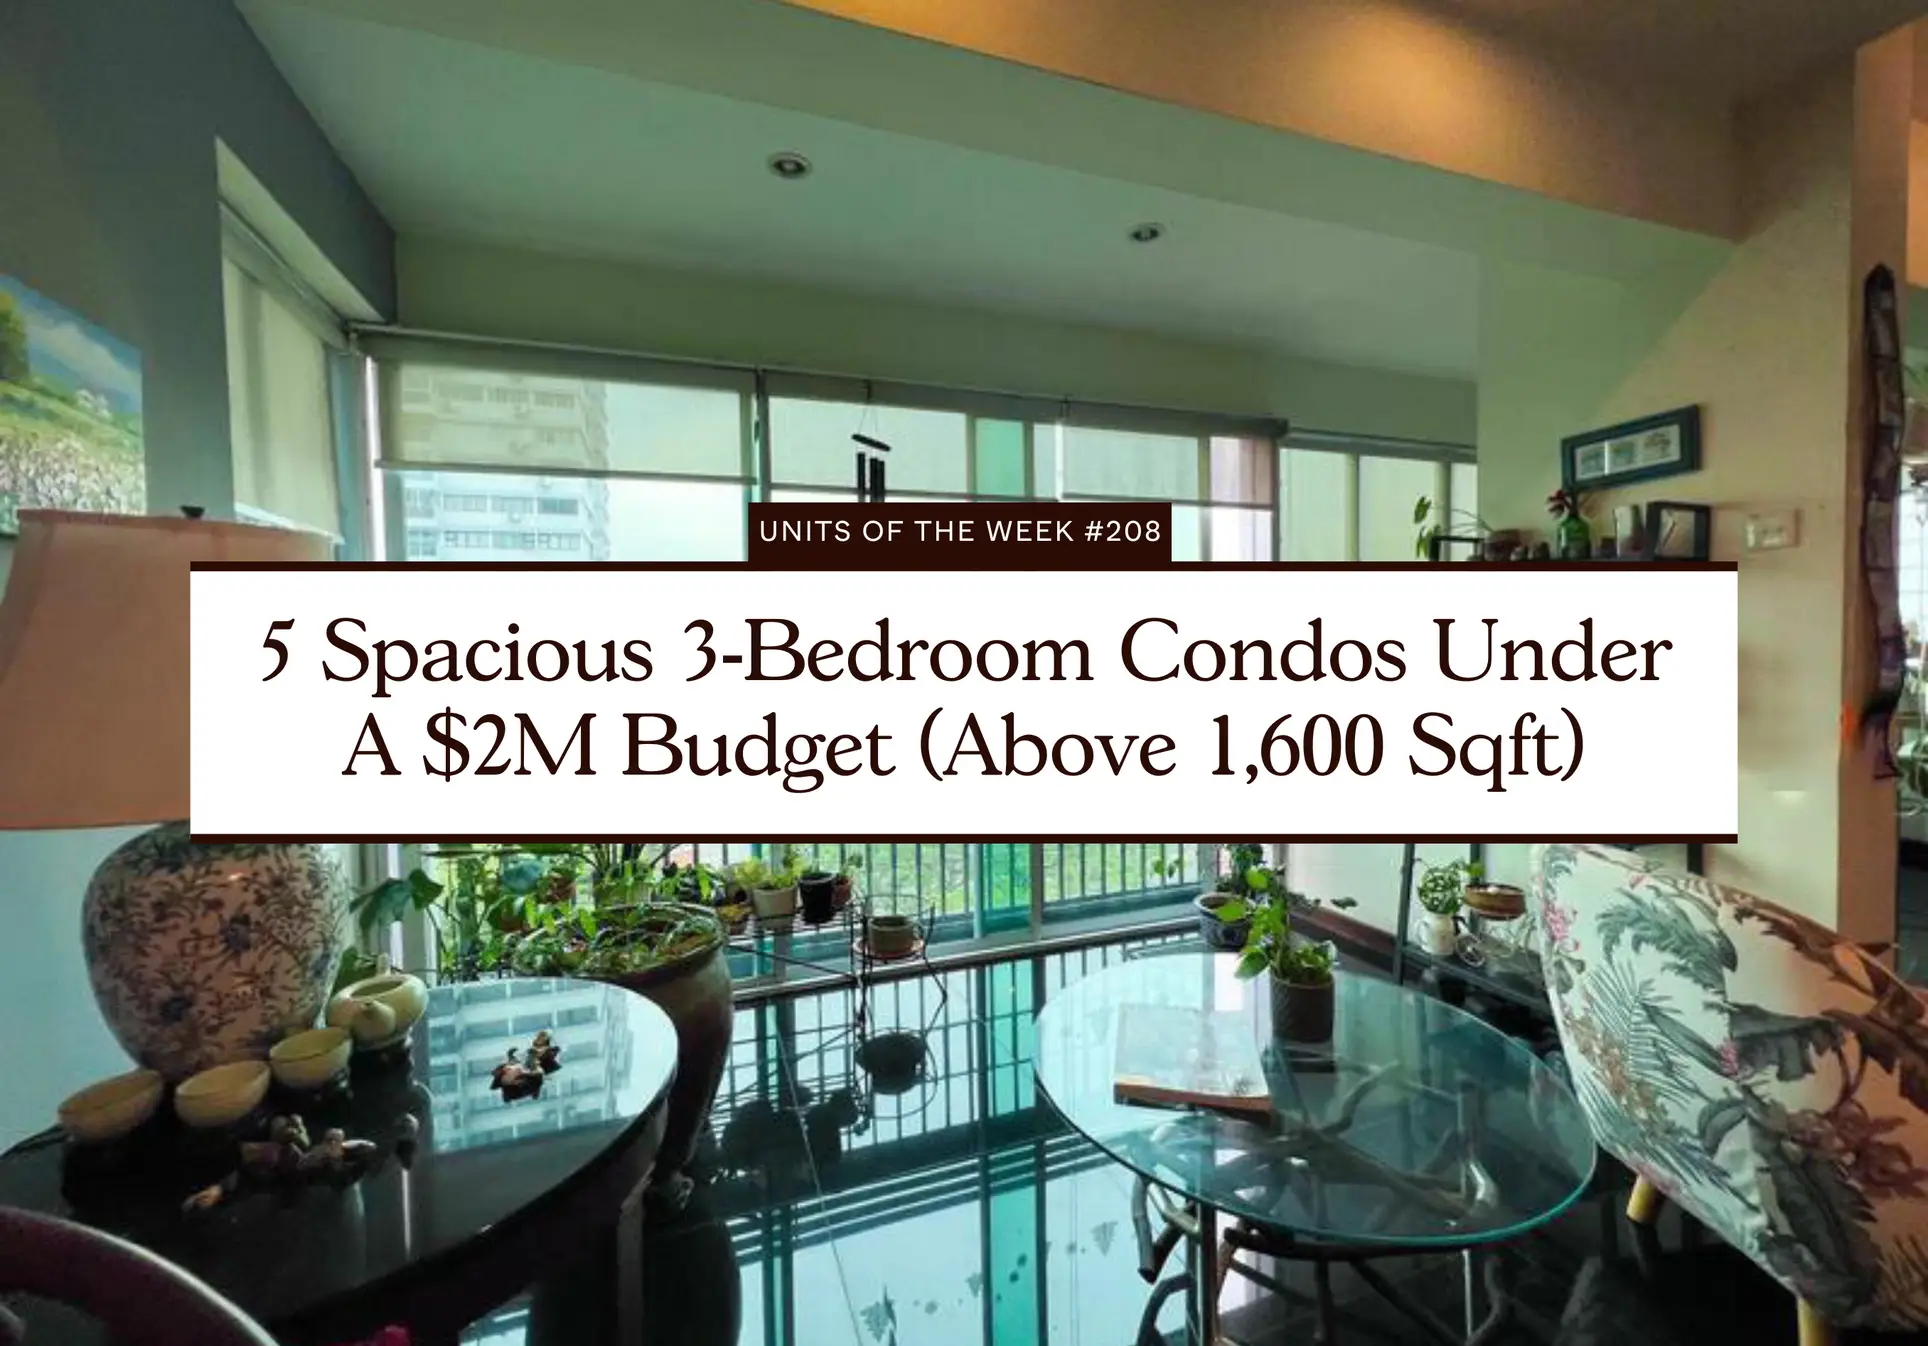 5 Spacious 3 Bedroom Condos Under A 2M Budget Above 1600 Sqft